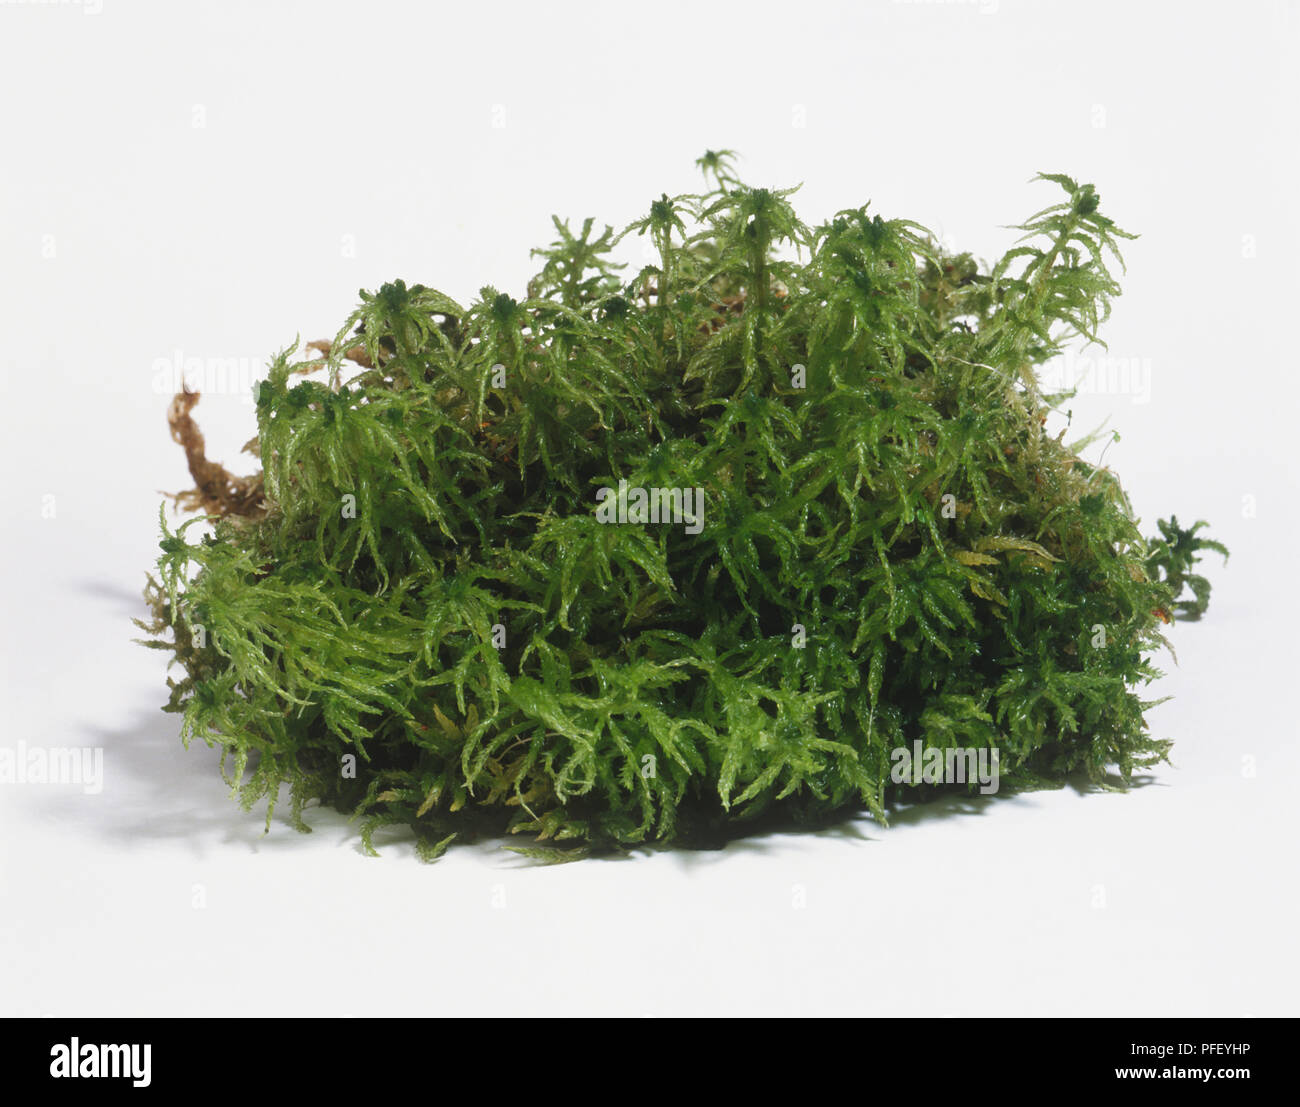 Lump of green moss Stock Photo